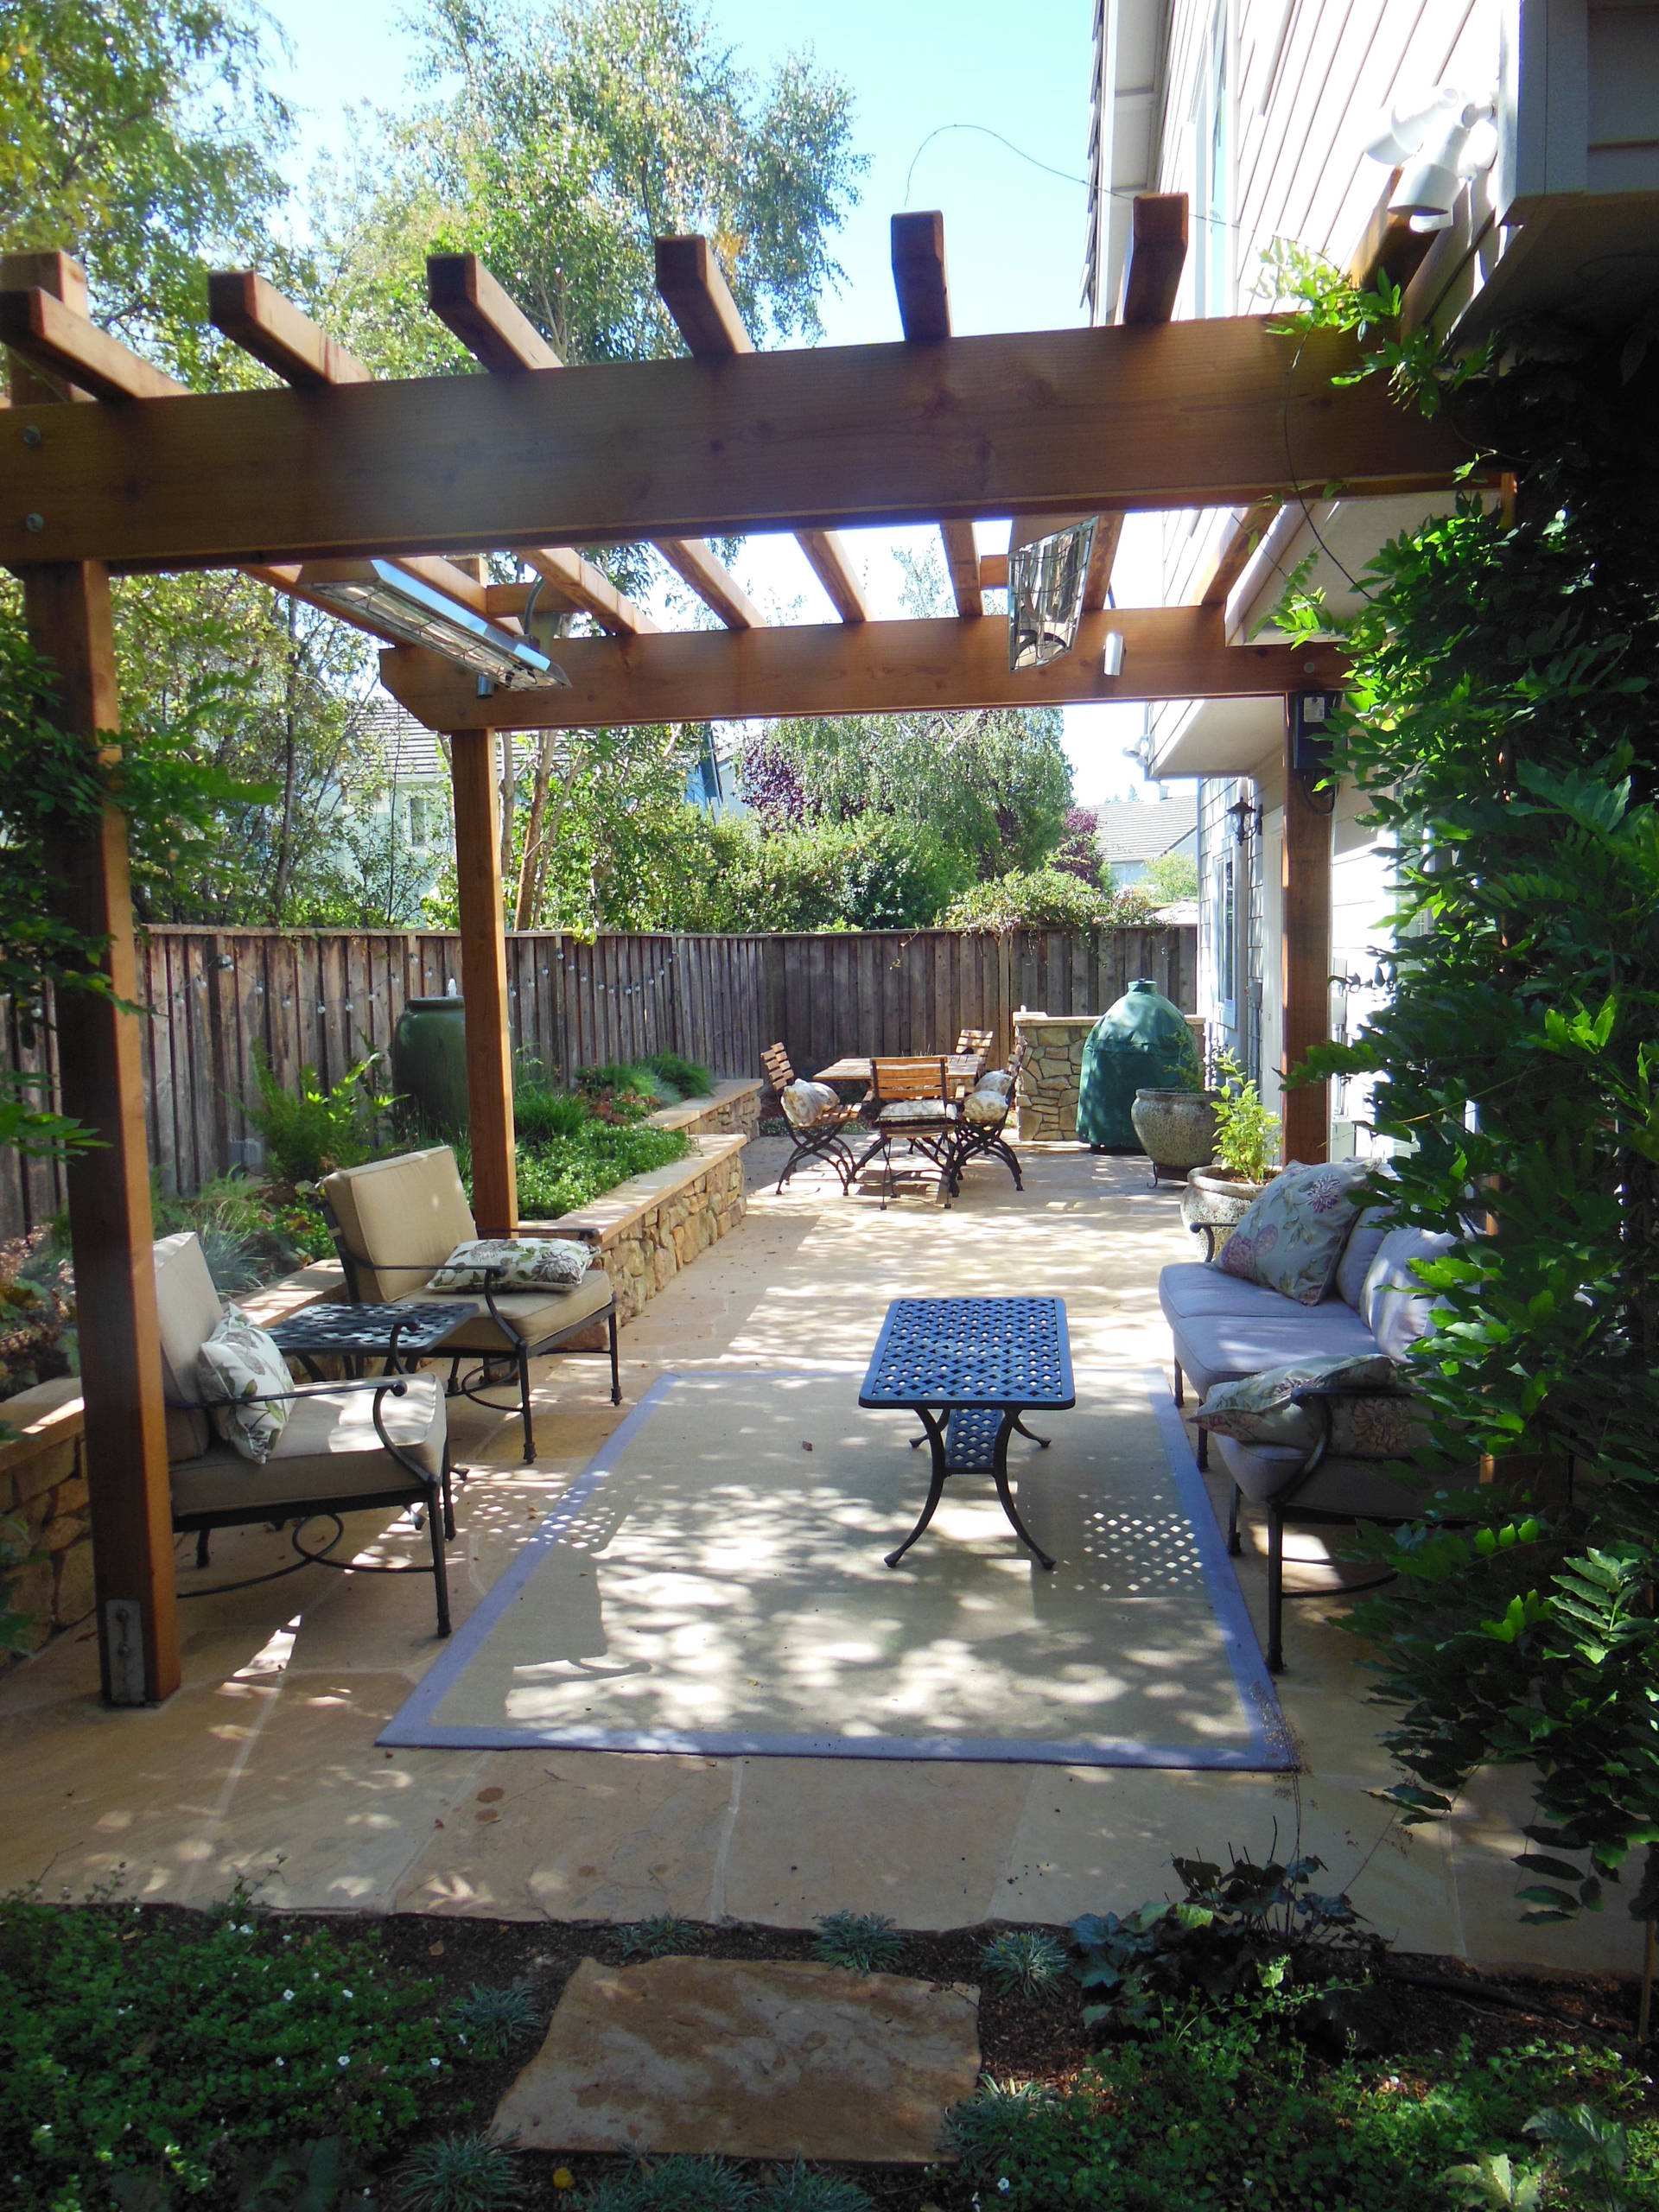 Discover Pergola Design Ideas for Your Outdoor Space